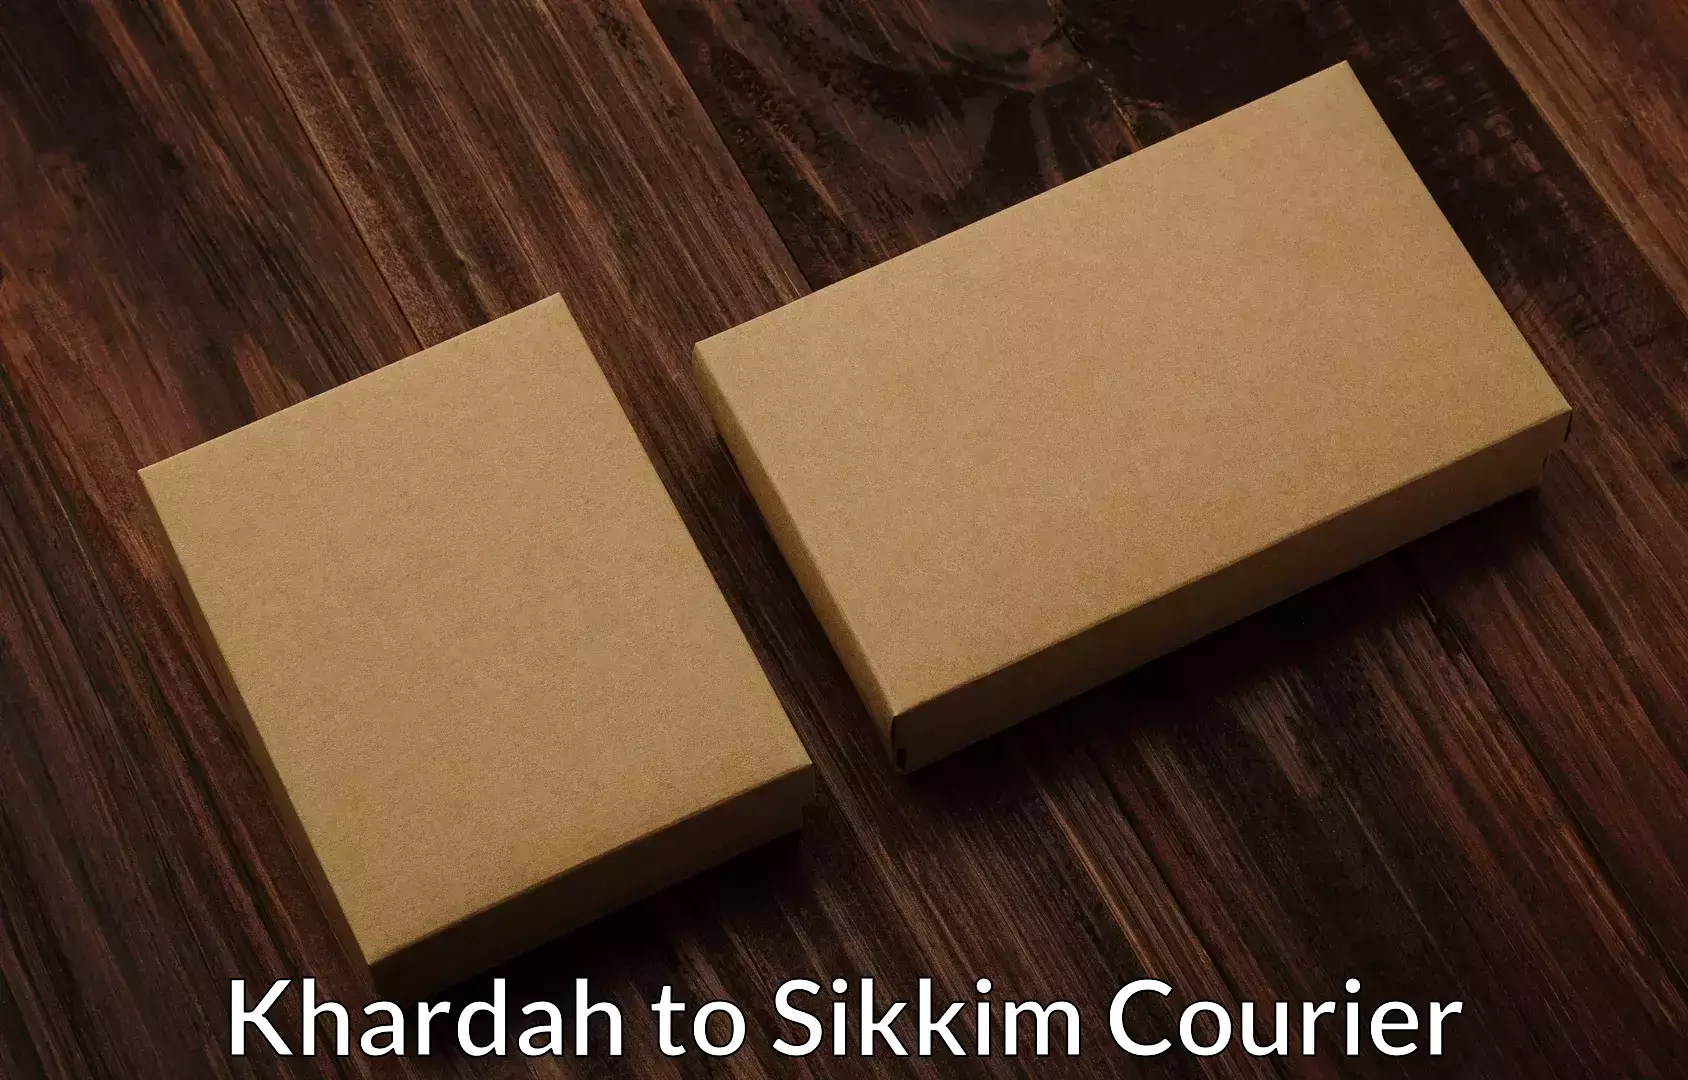 Moving and packing experts Khardah to Mangan